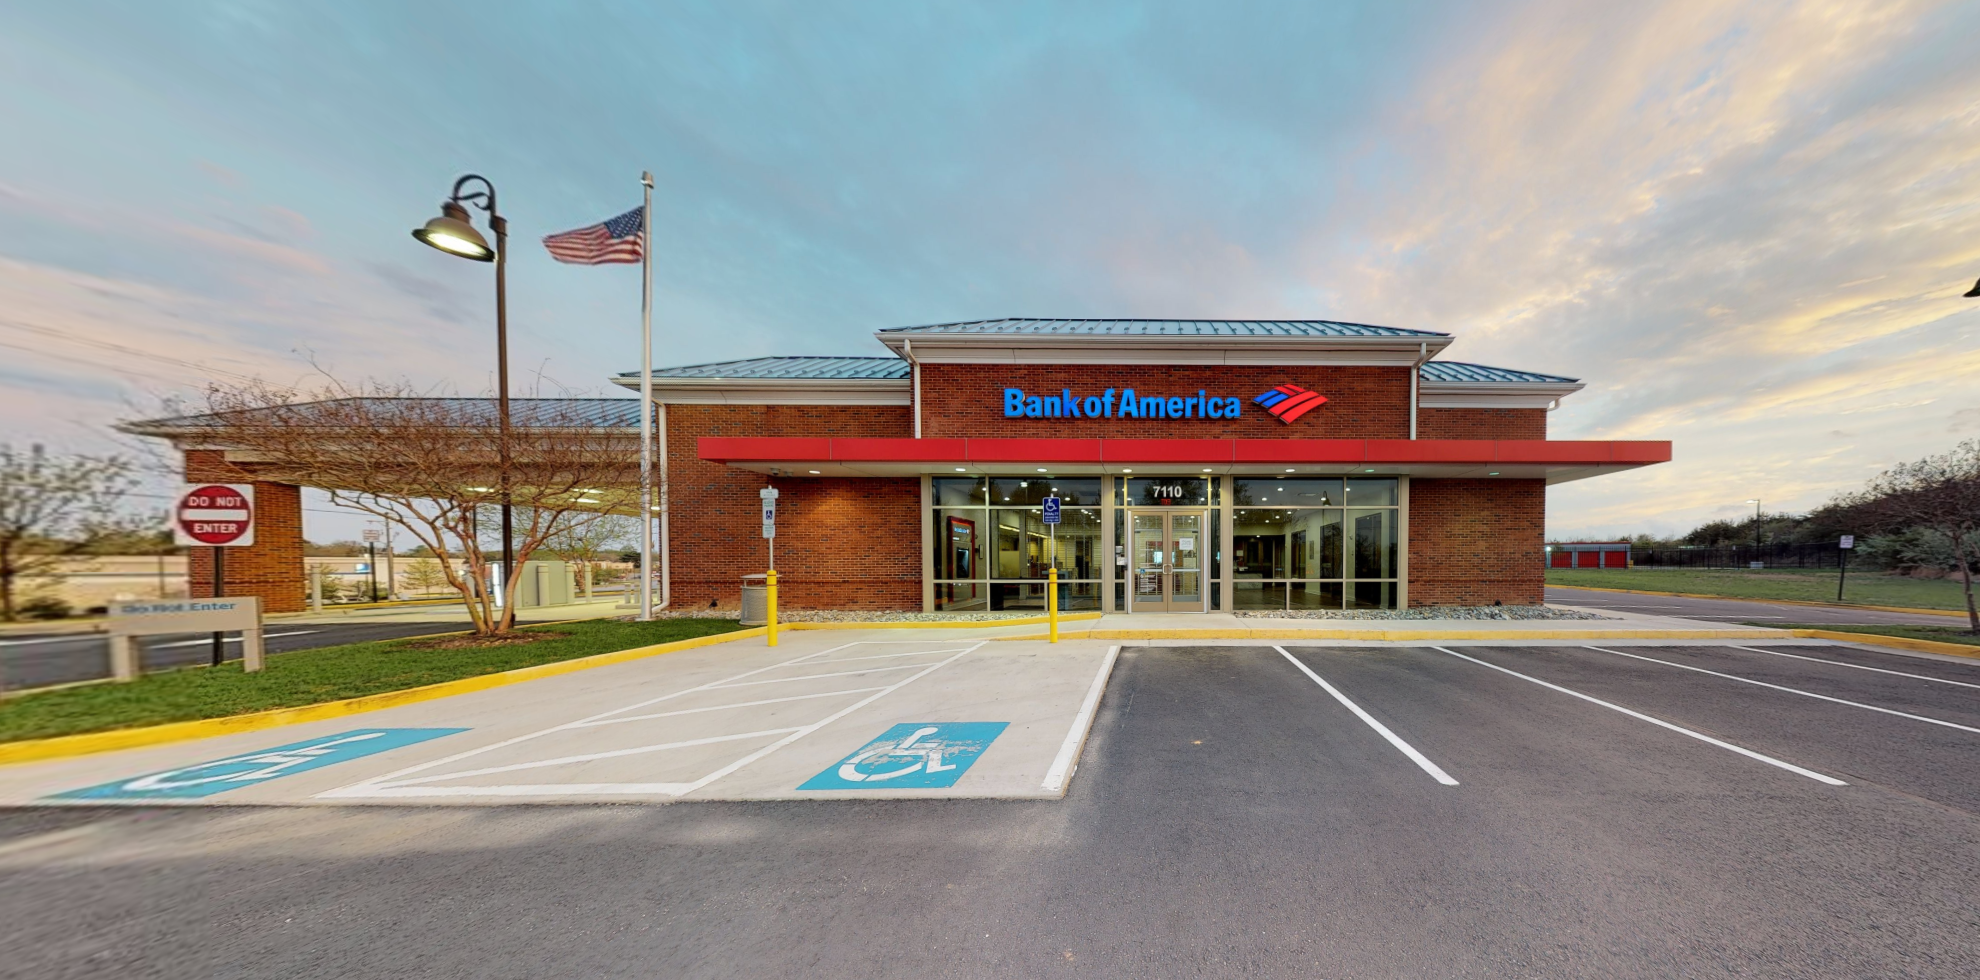 Bank of America financial center with drive-thru ATM | 7110 Harrison Rd, Fredericksburg, VA 22407